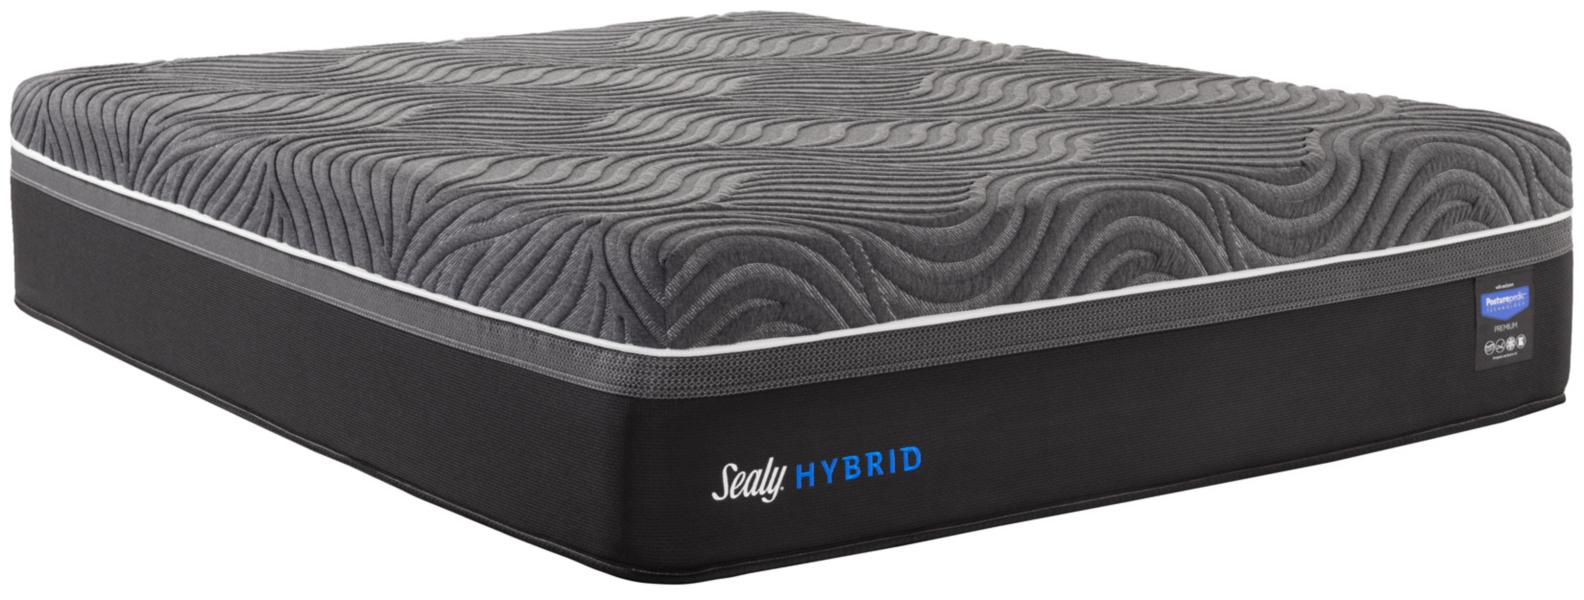 sealy hybrid medium mattress